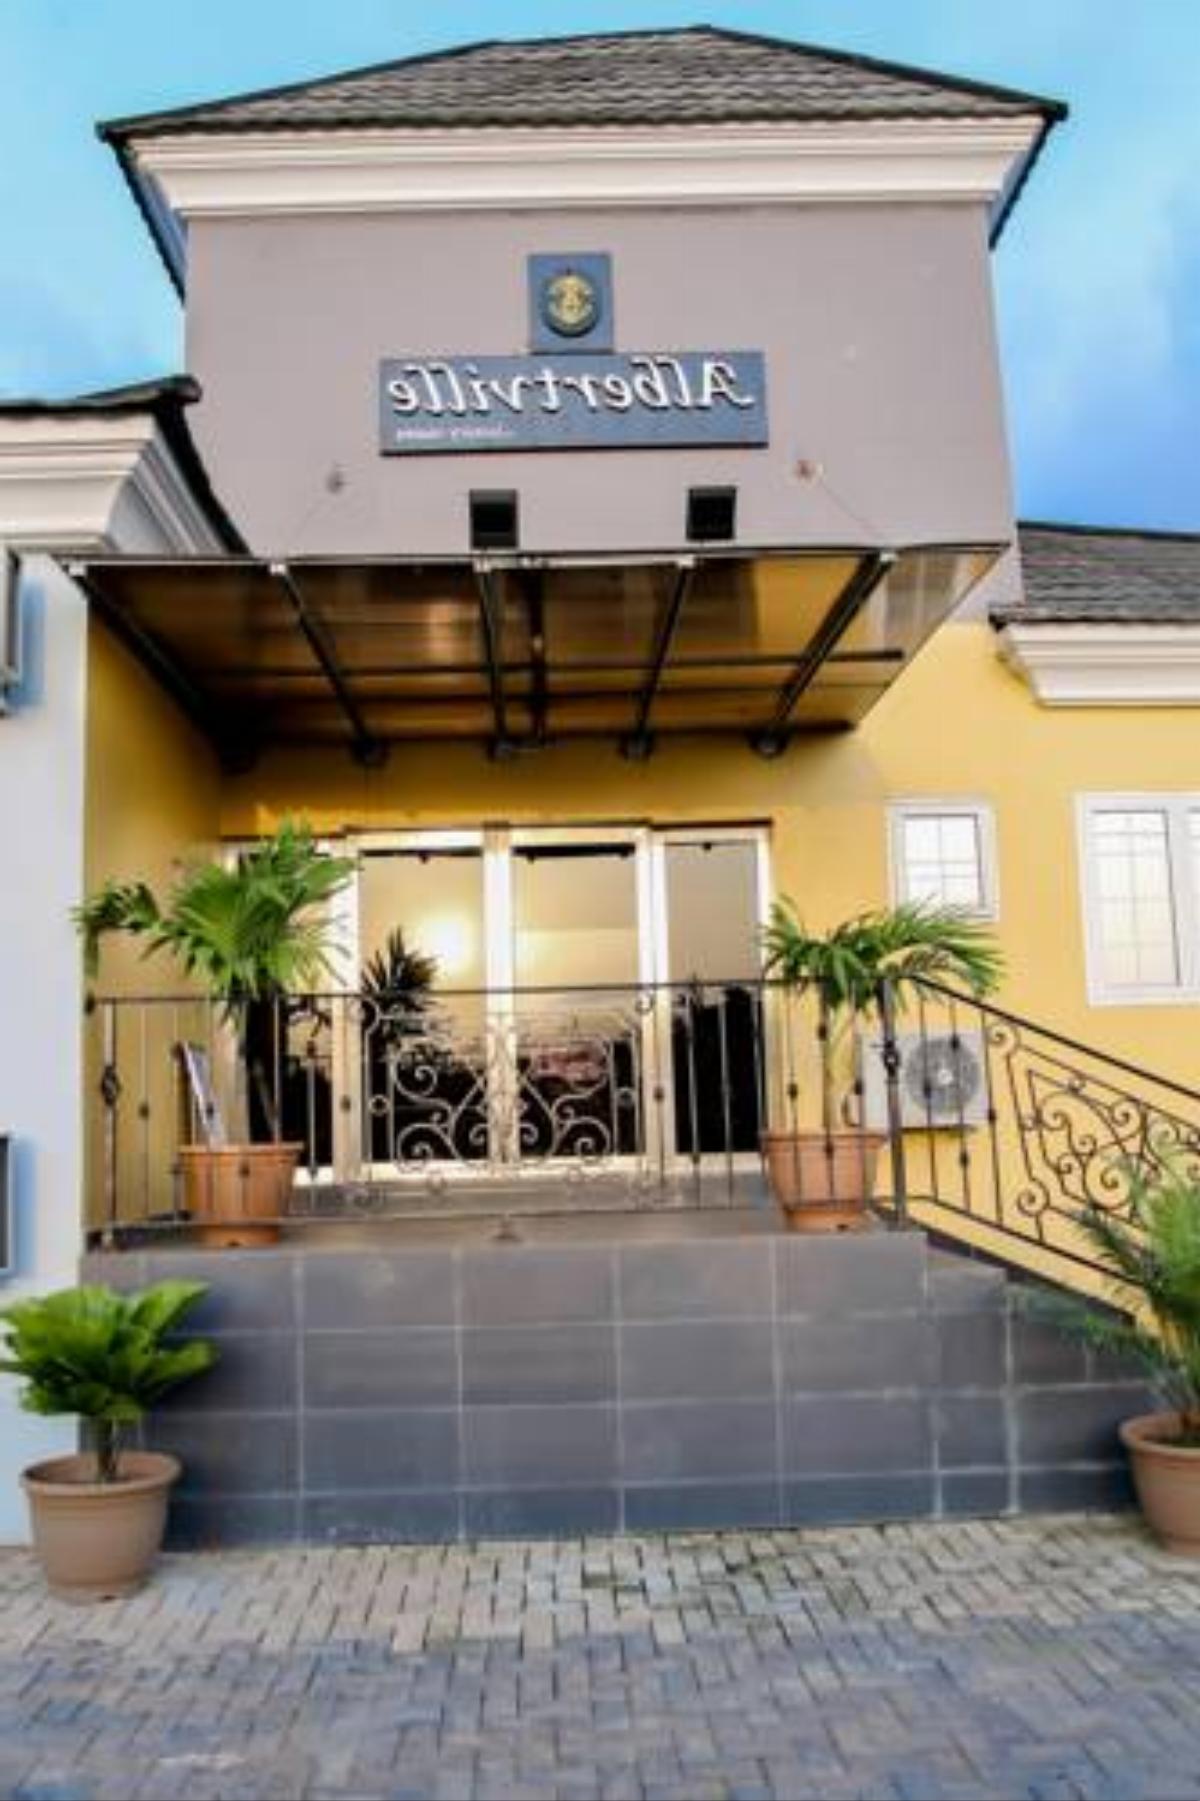 Albertville Luxury Rooms Hotel Ilesa Nigeria